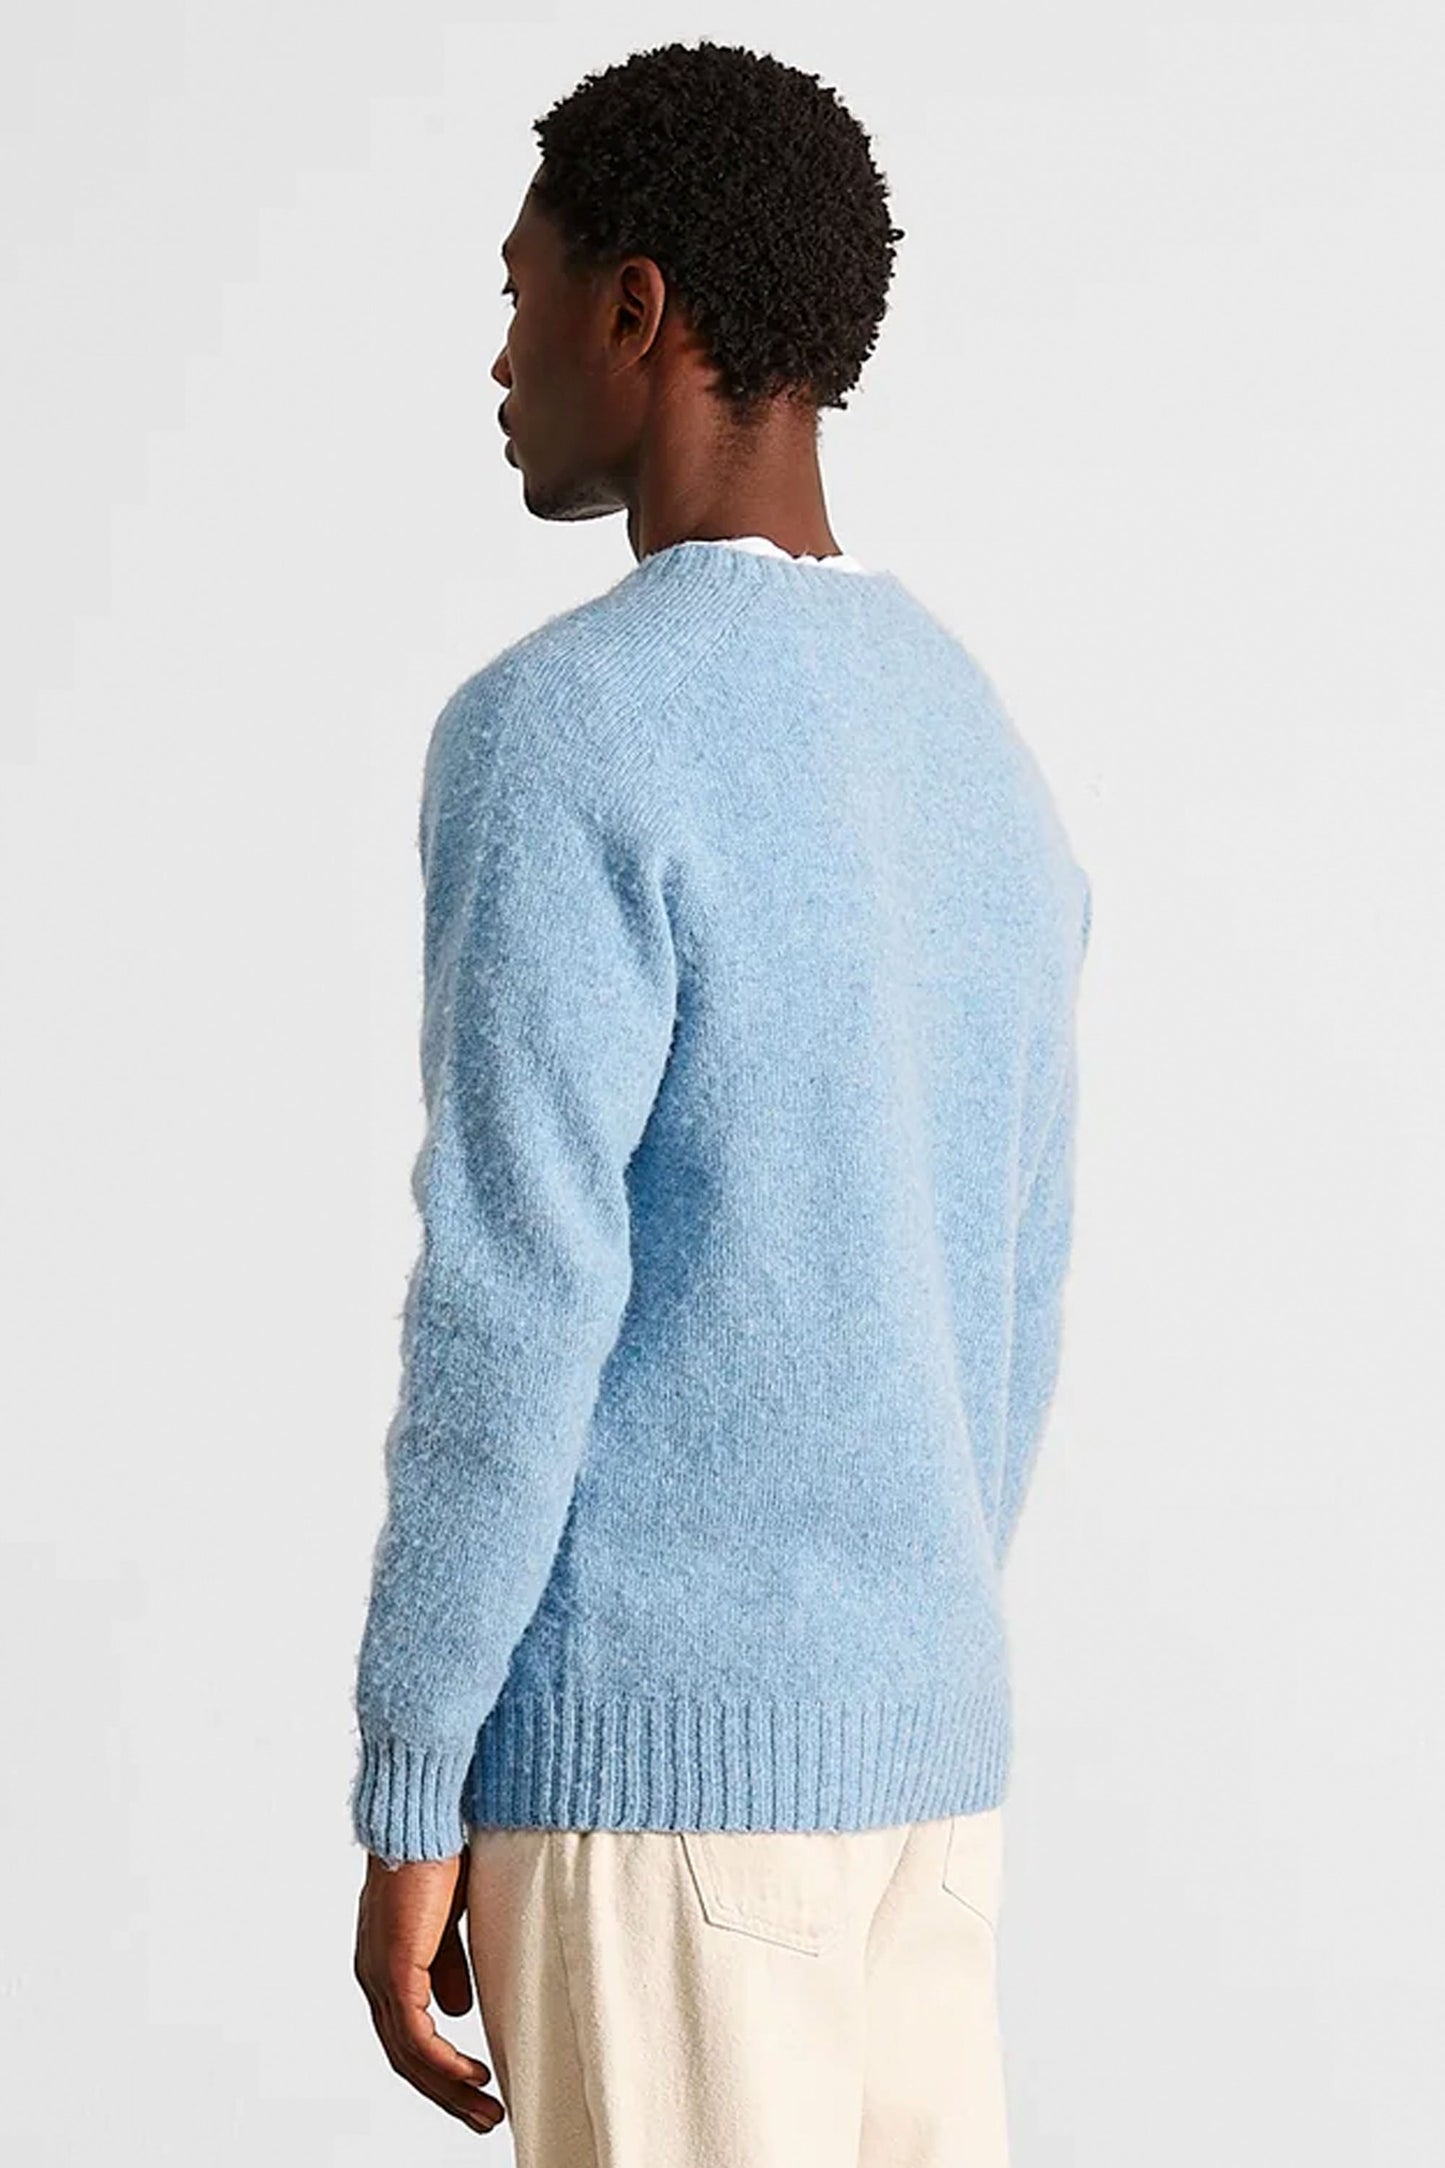 Pukas-Surf-Shop-edmmond-sweater-Shetland-plain-light-blue